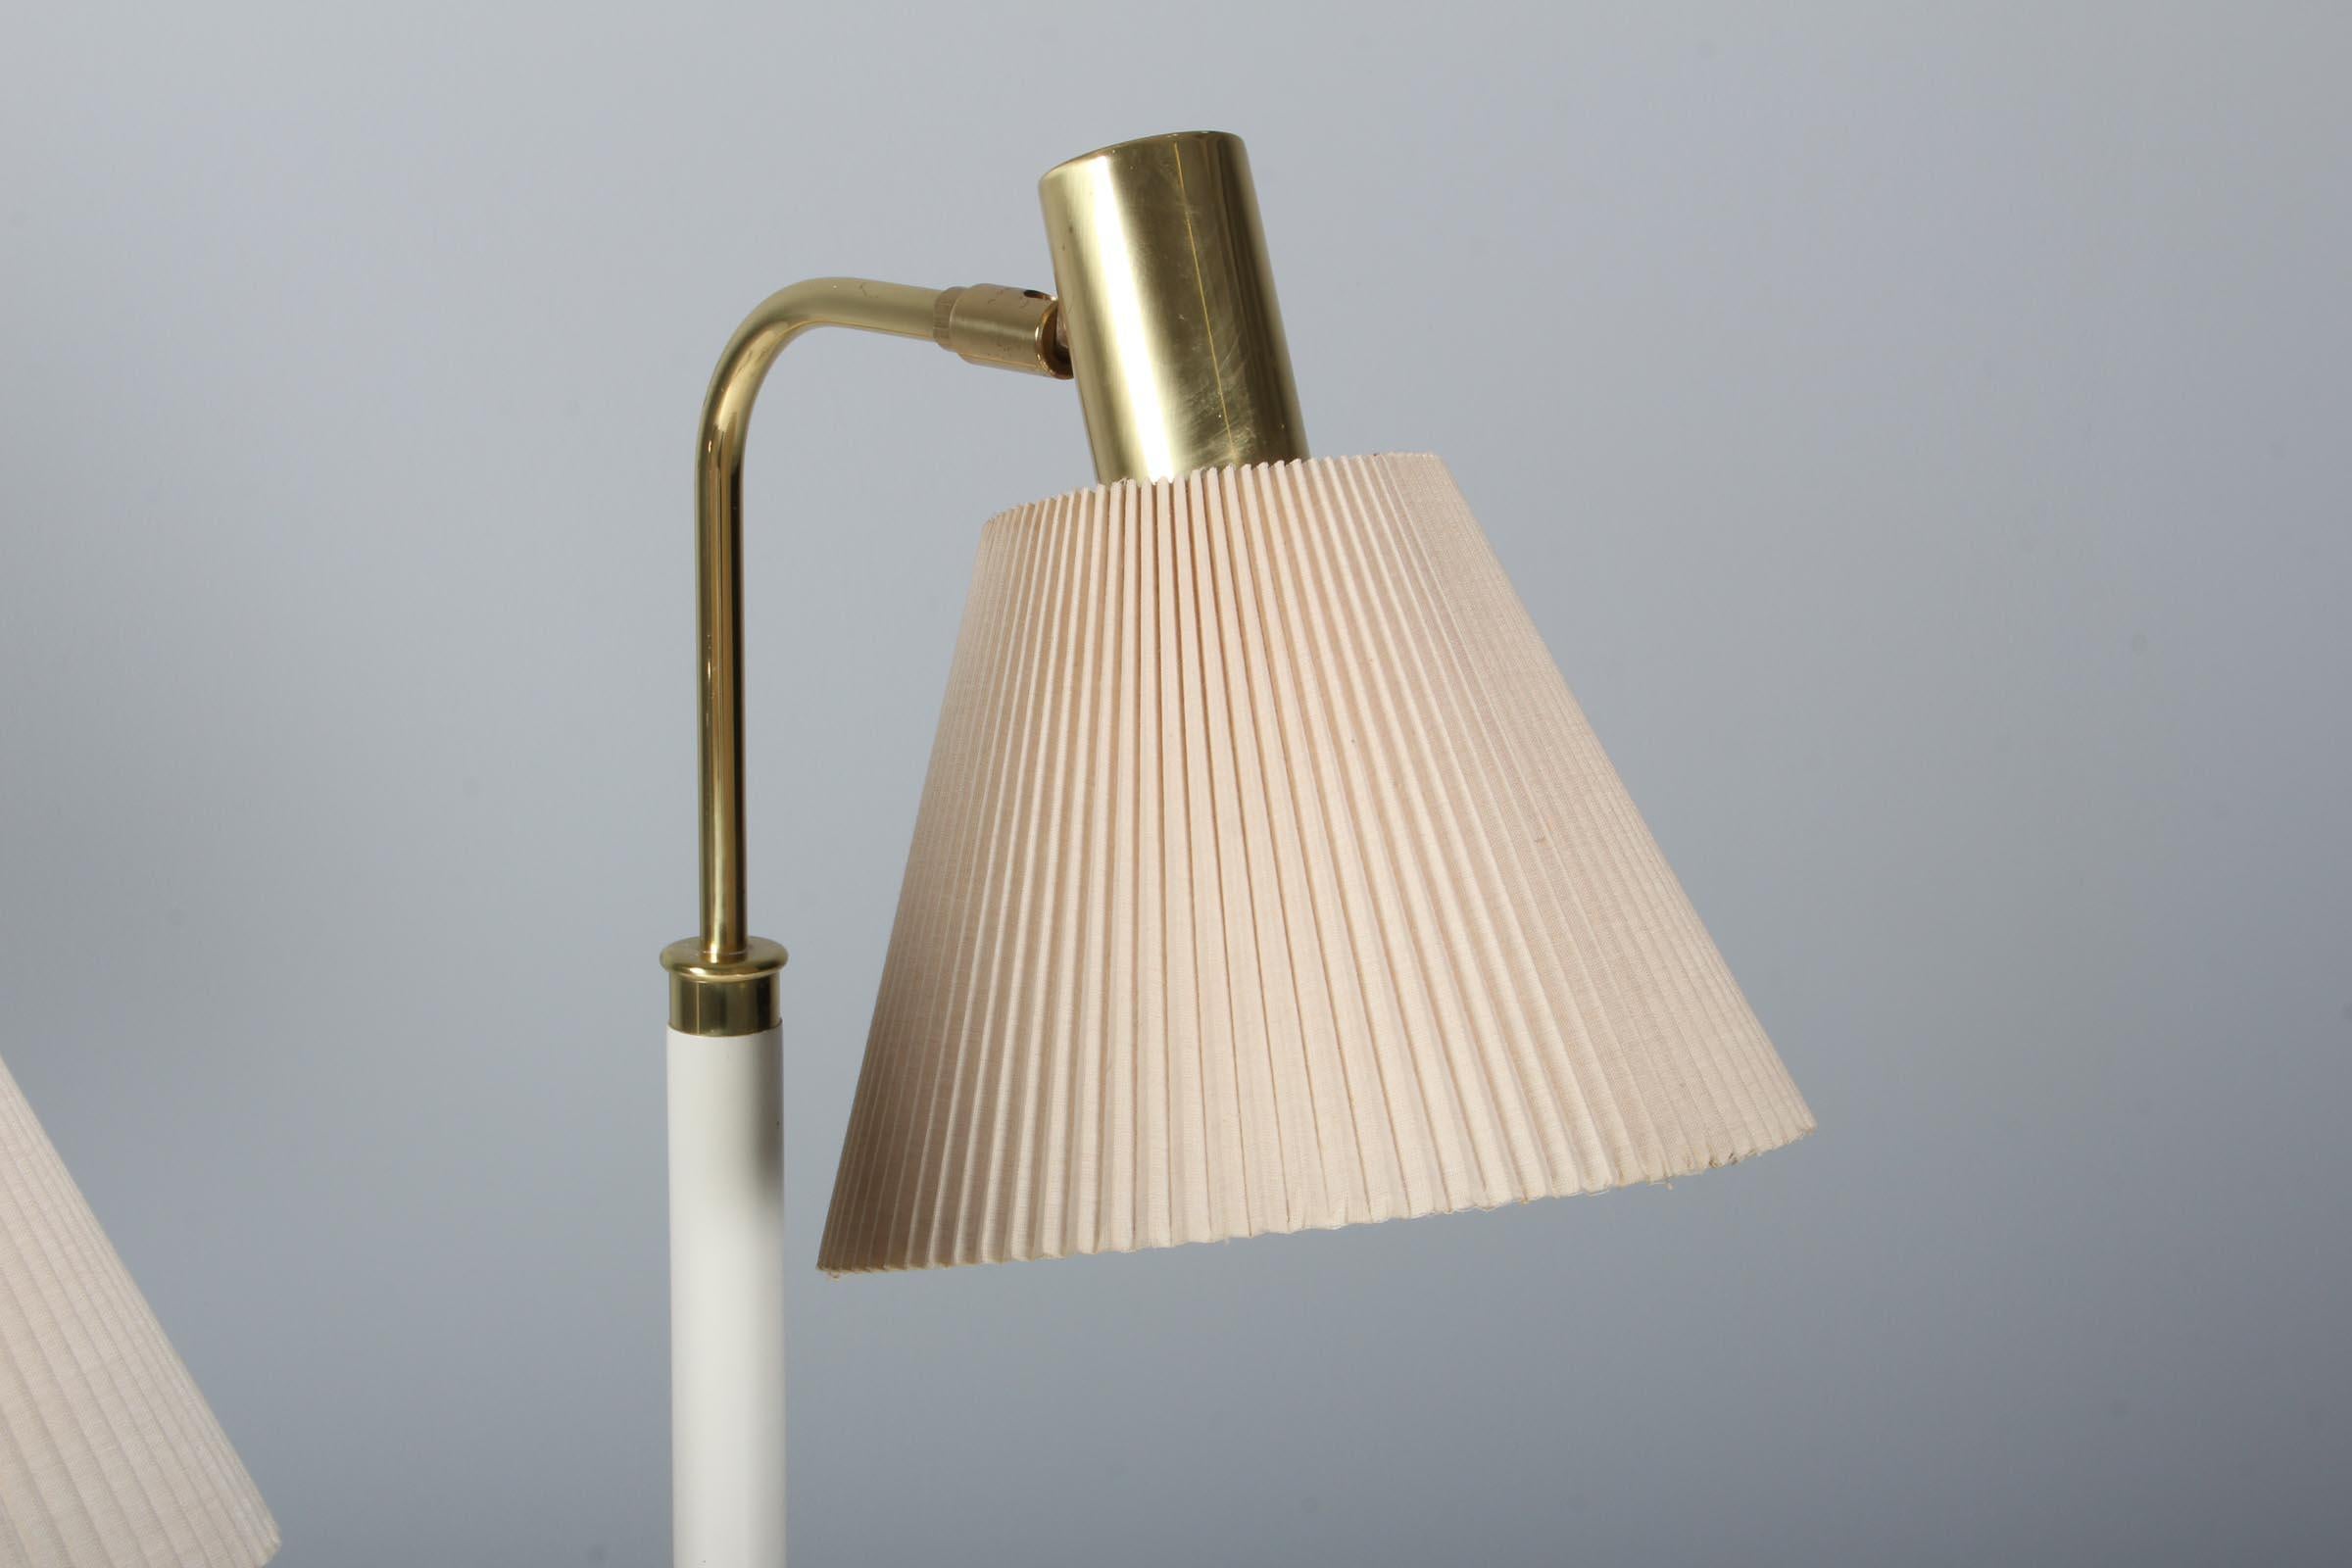 Scandinavian Modern Karin Mobring, Thomas Jelinek: “Stockholm”. Pair of Table Lamps, Sweden, 1960s For Sale